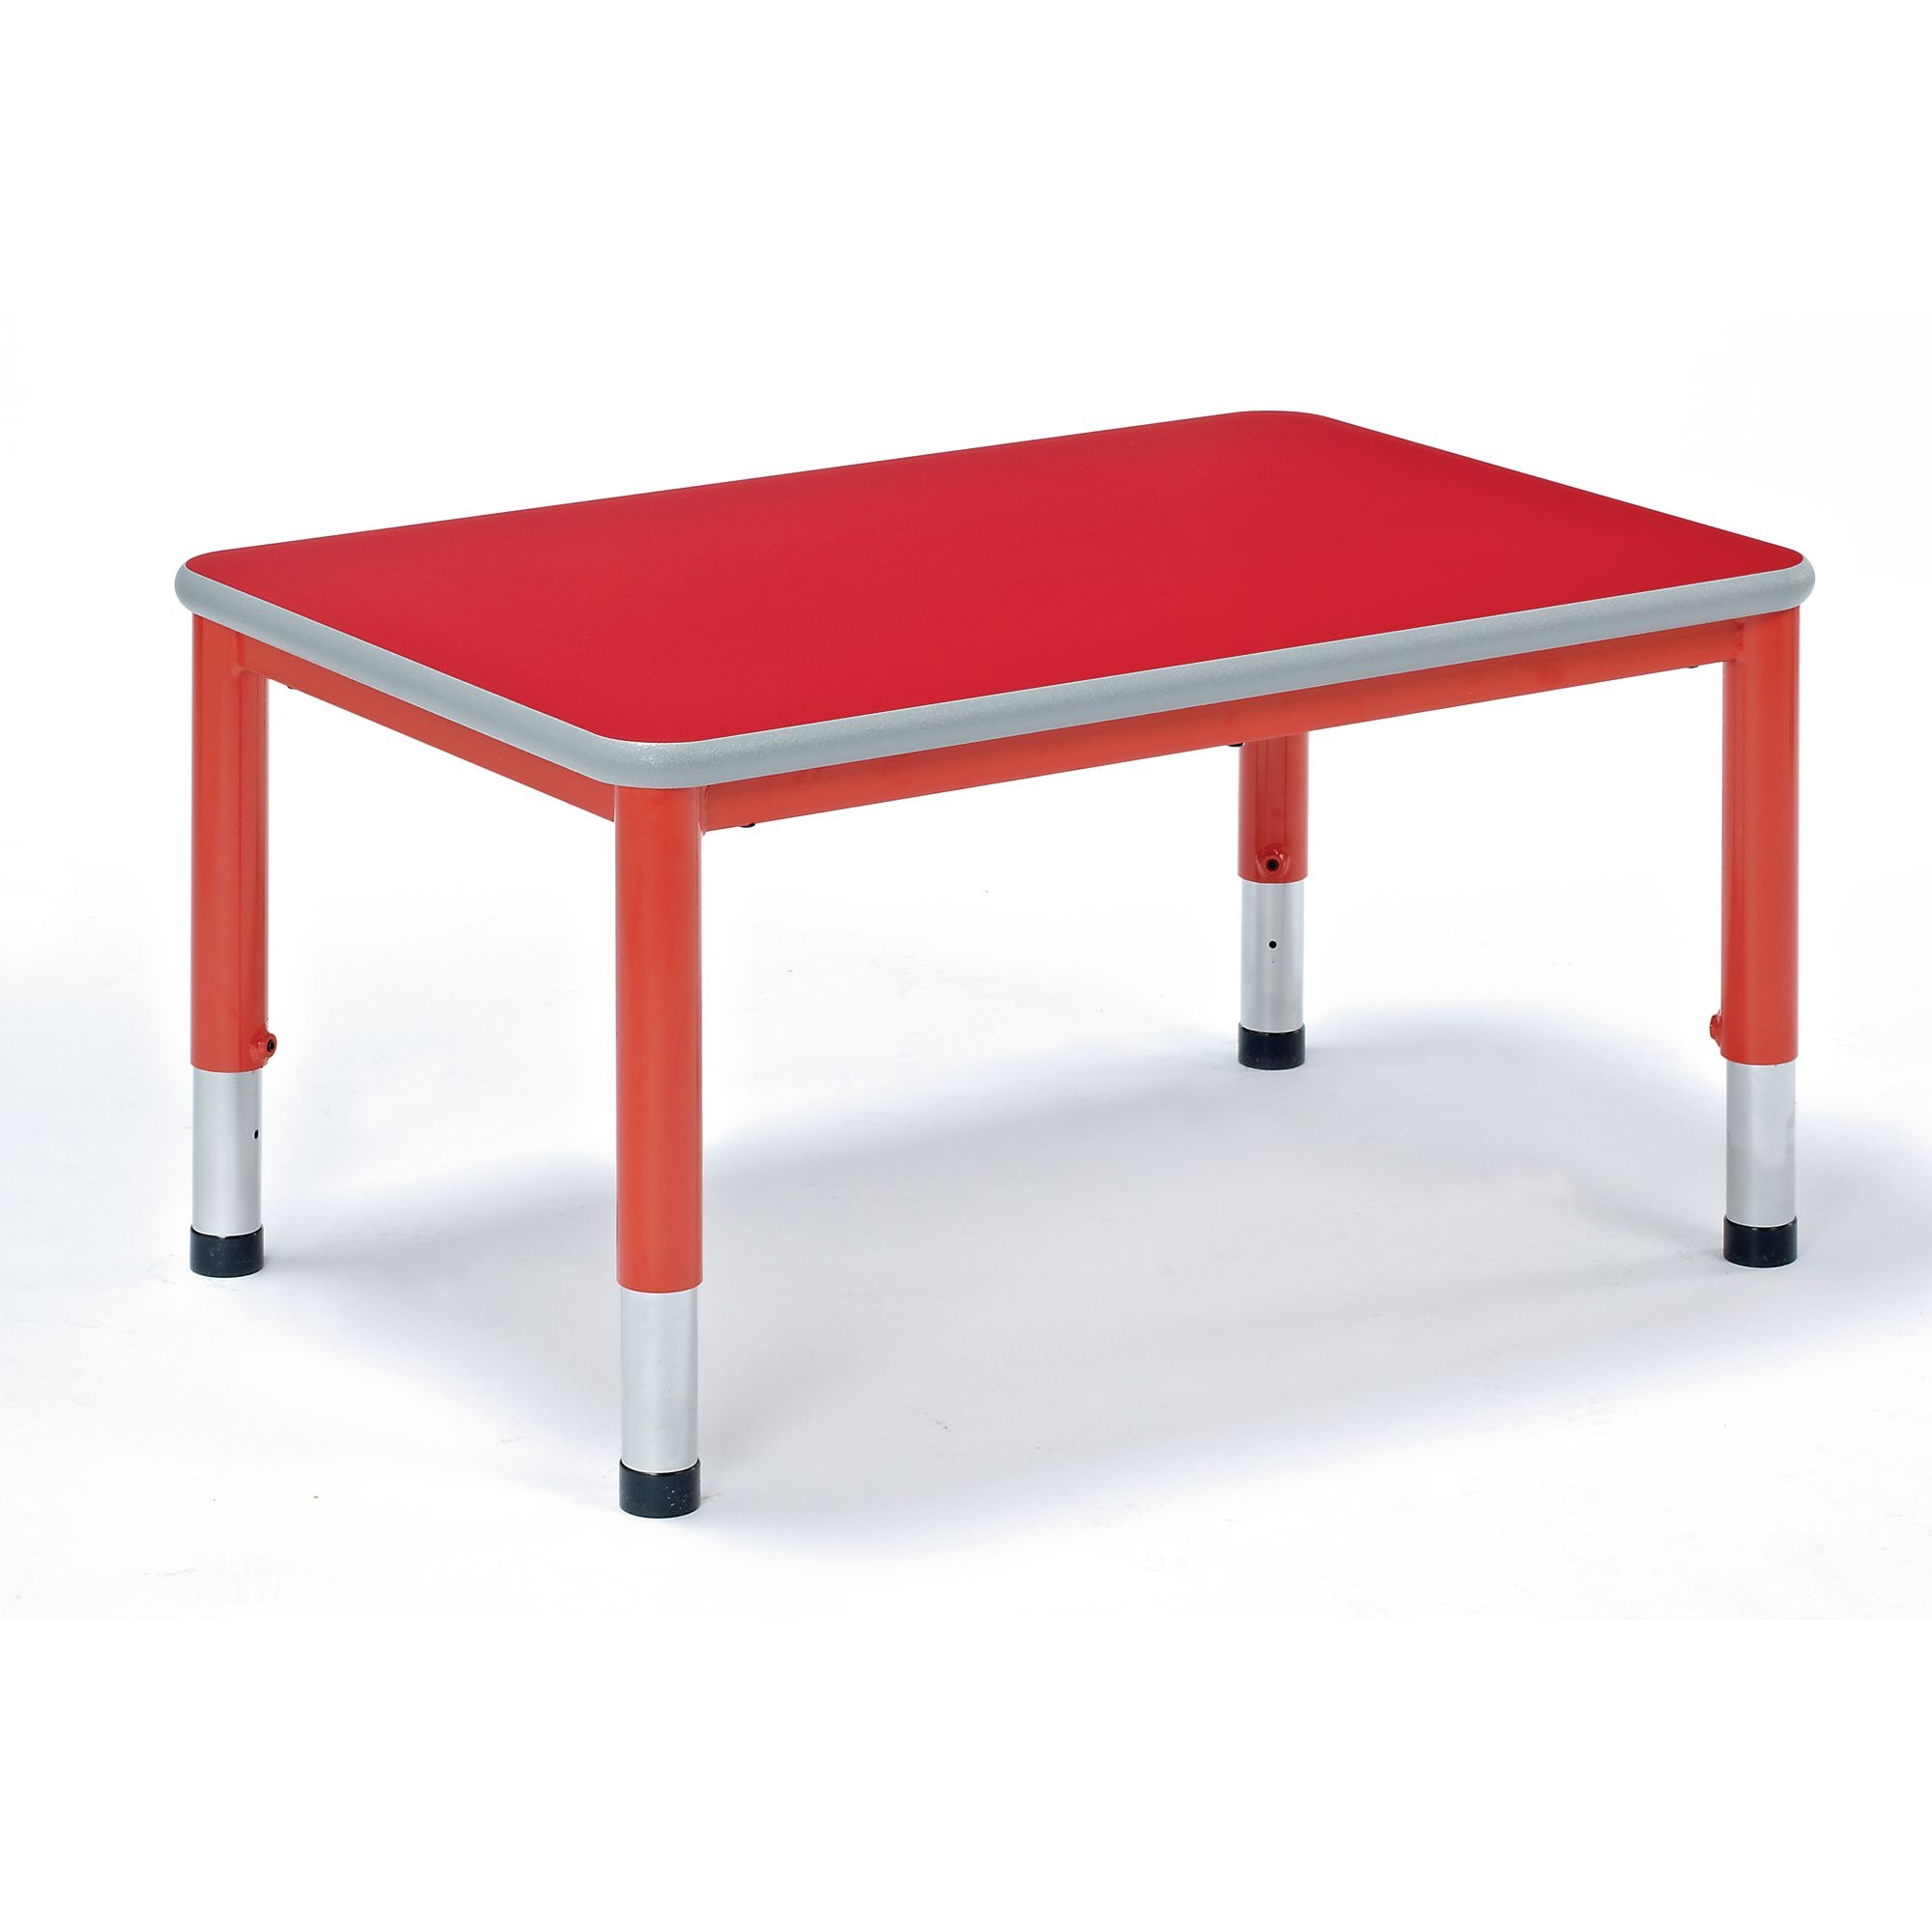 Harlequin Rectangular Height Adjustable Steel Classroom Table - 900 x 600 x 600mm - Red